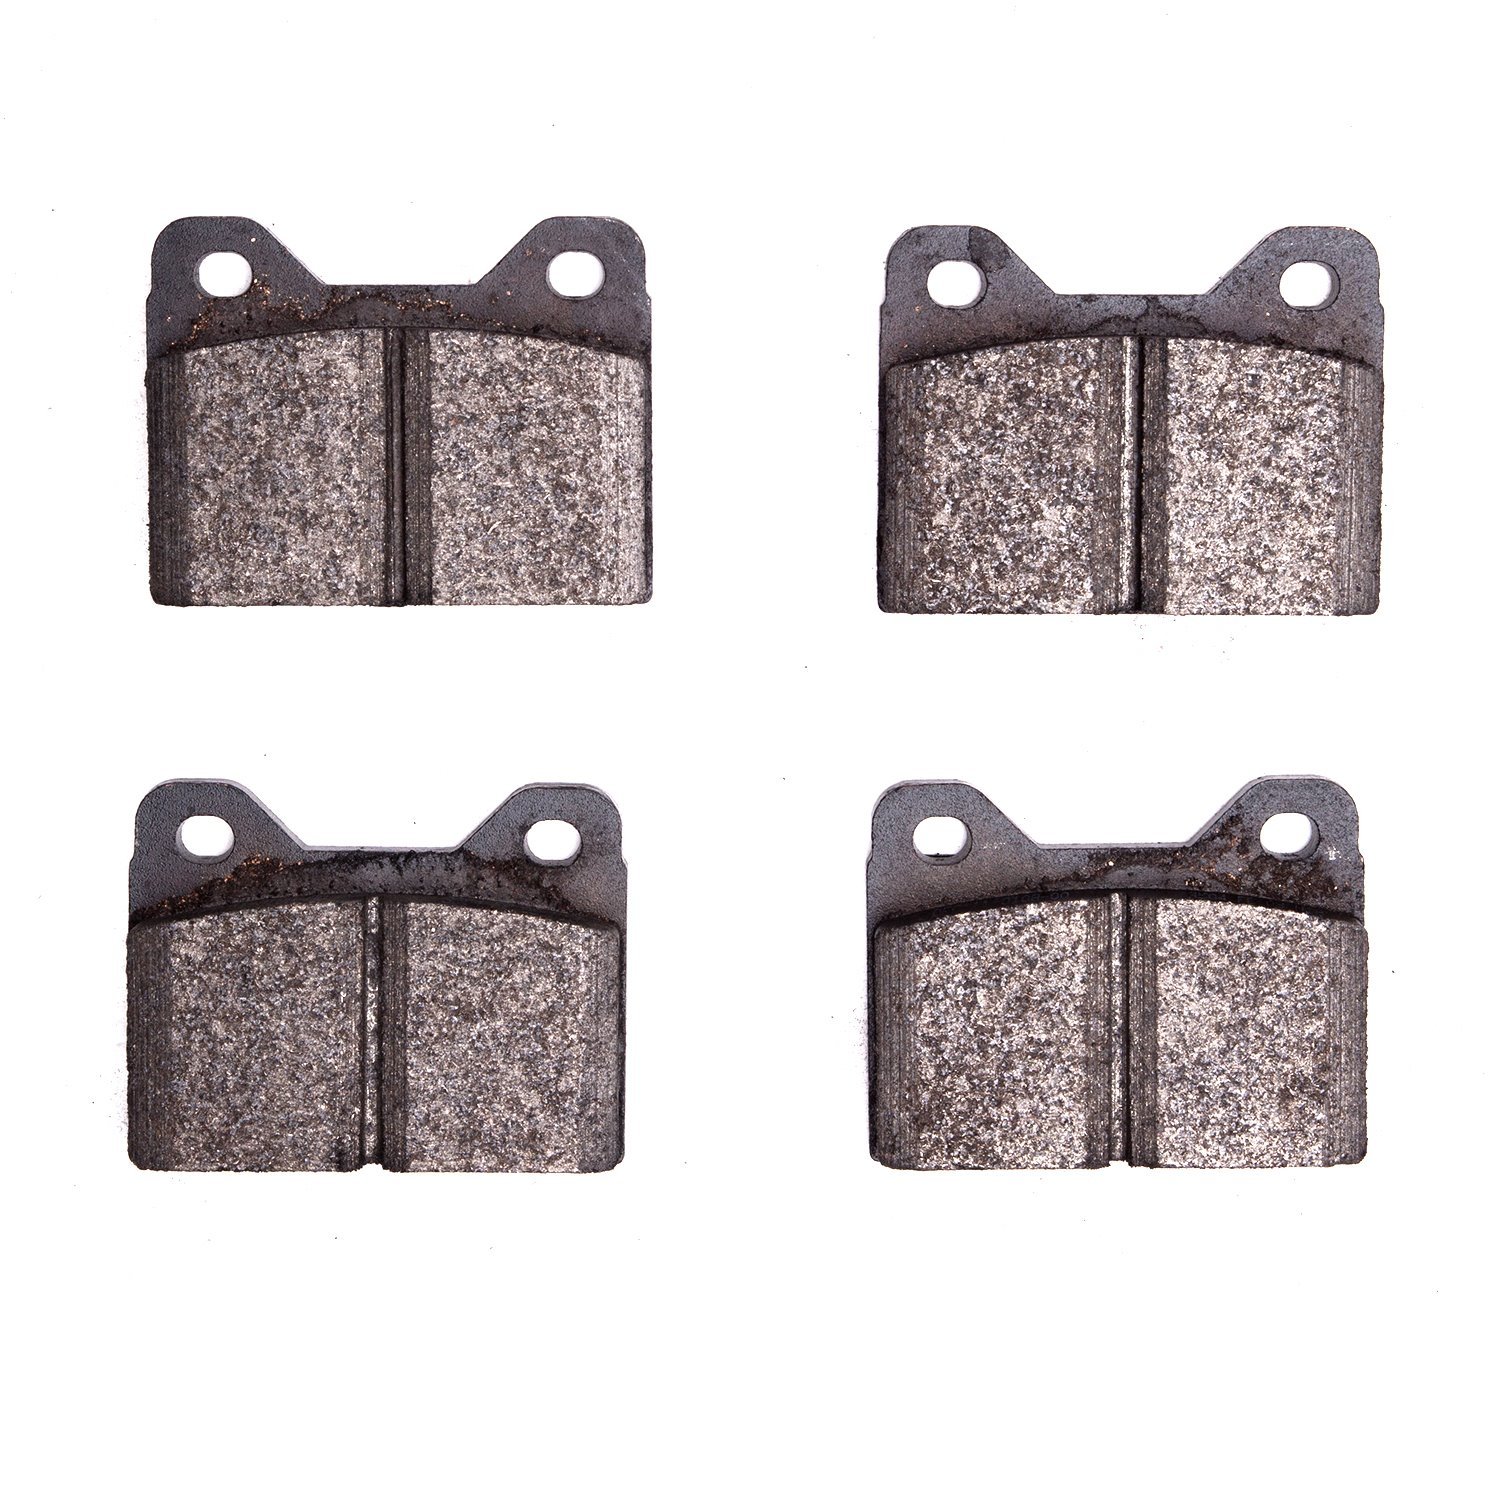 Ceramic Brake Pads, 1967-1991 Fits Multiple Makes/Models, Position: Front & Rear